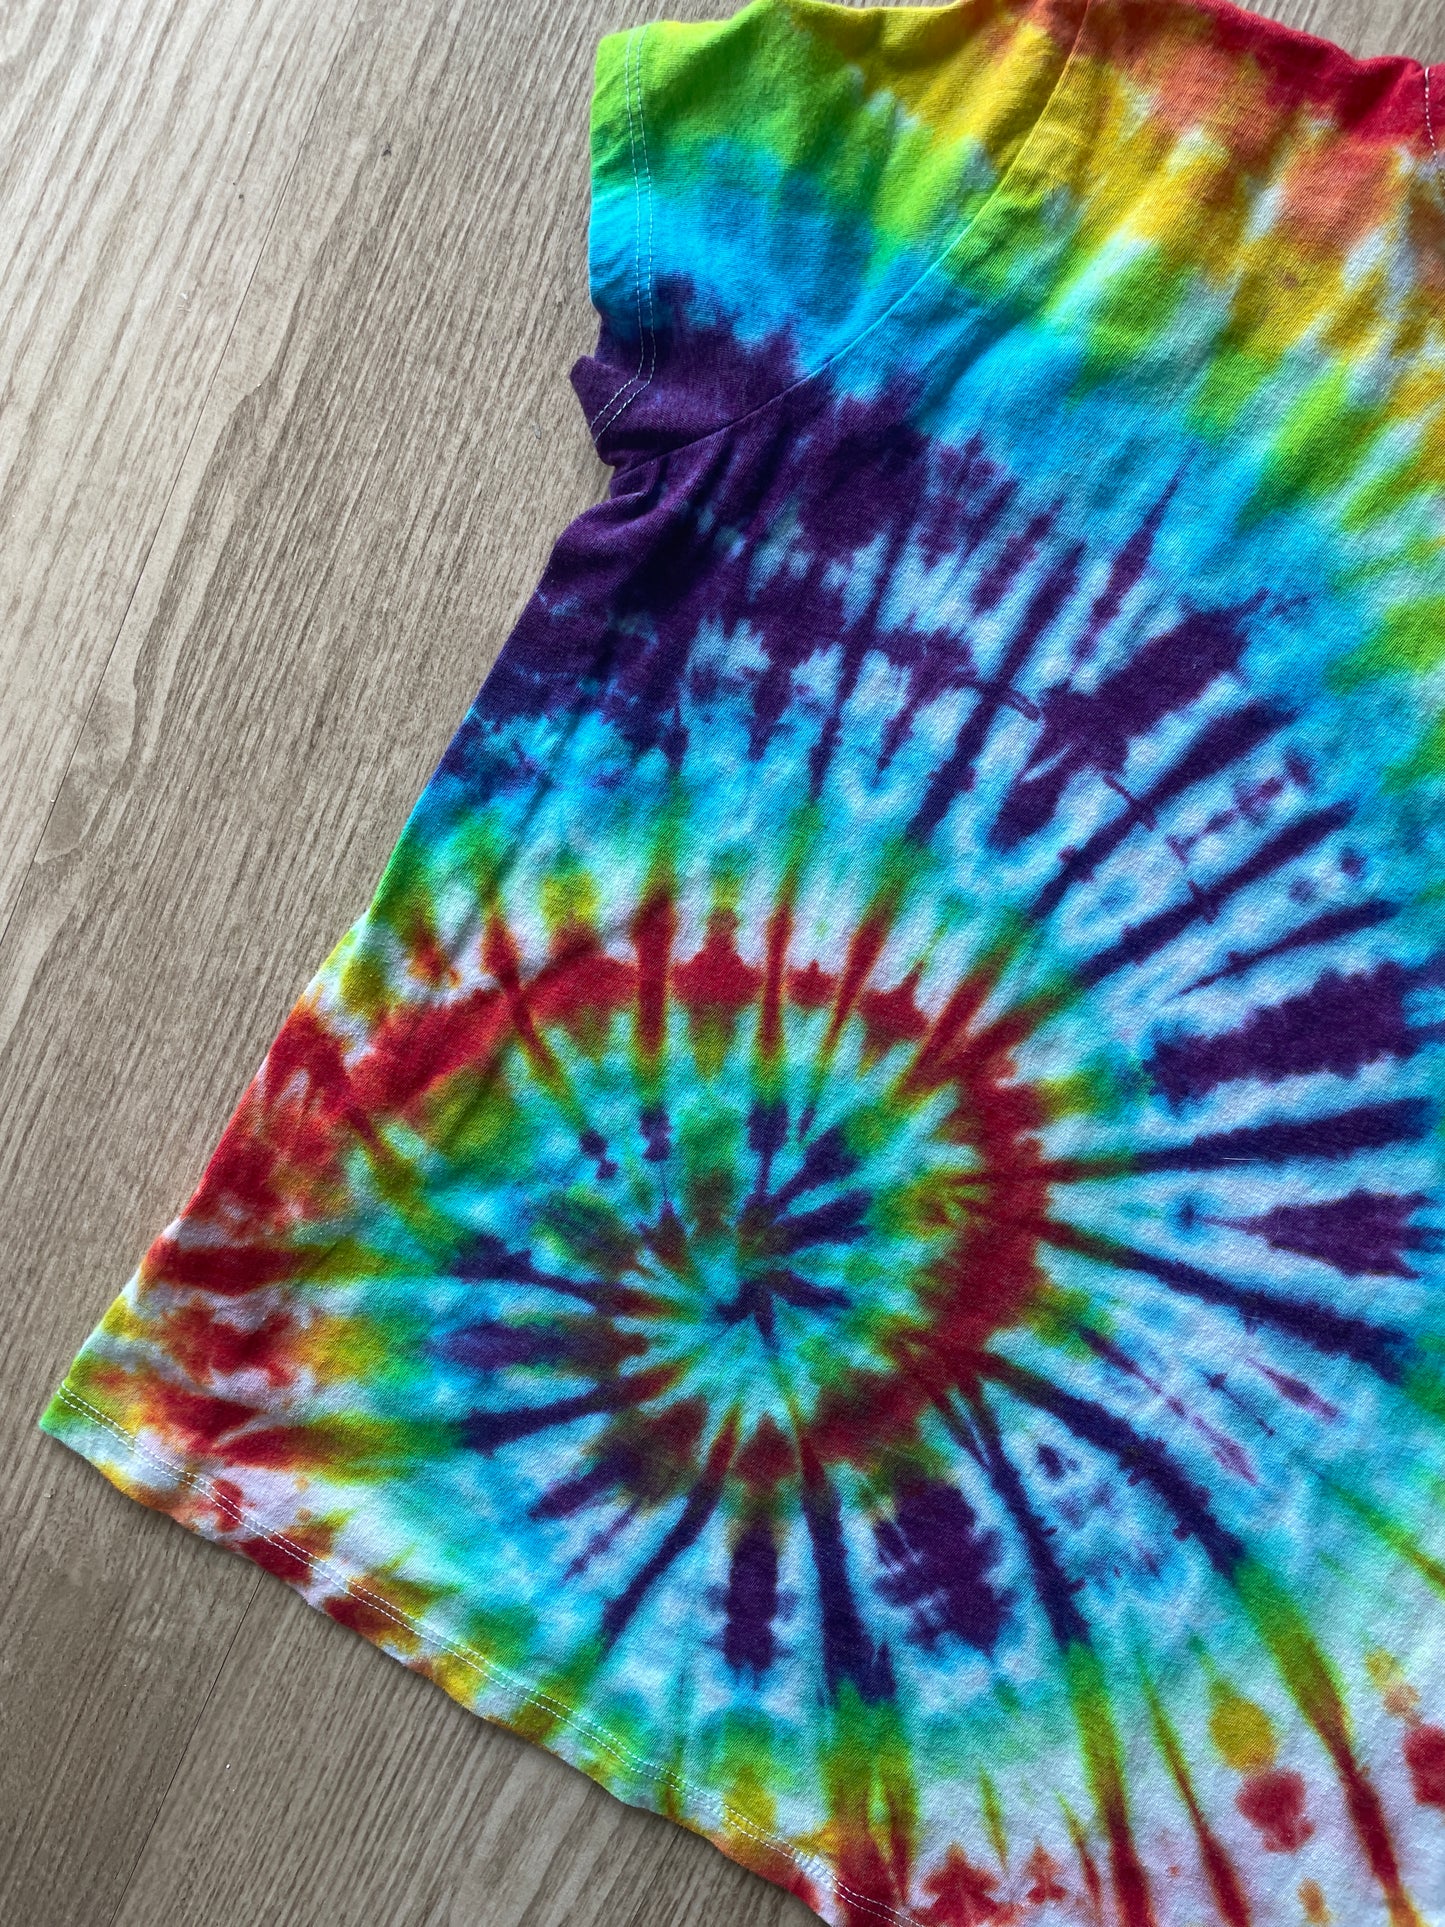 MEDIUM Women's Equality PRIDE Handmade Tie Dye T-Shirt | One-Of-a-Kind Rainbow Spiral Short Sleeve